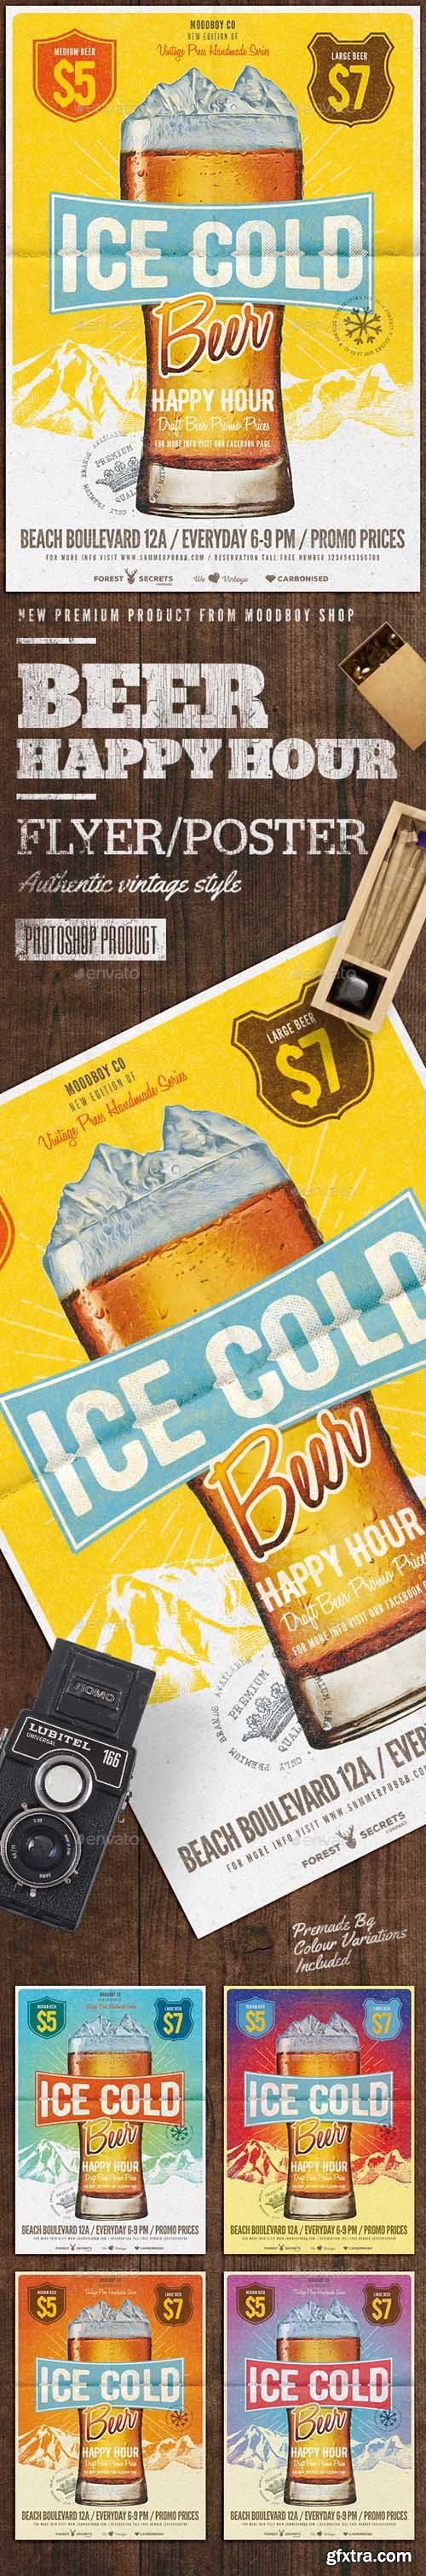 GR - Cold Beer Happy Hour Flyer/Poster 16559637